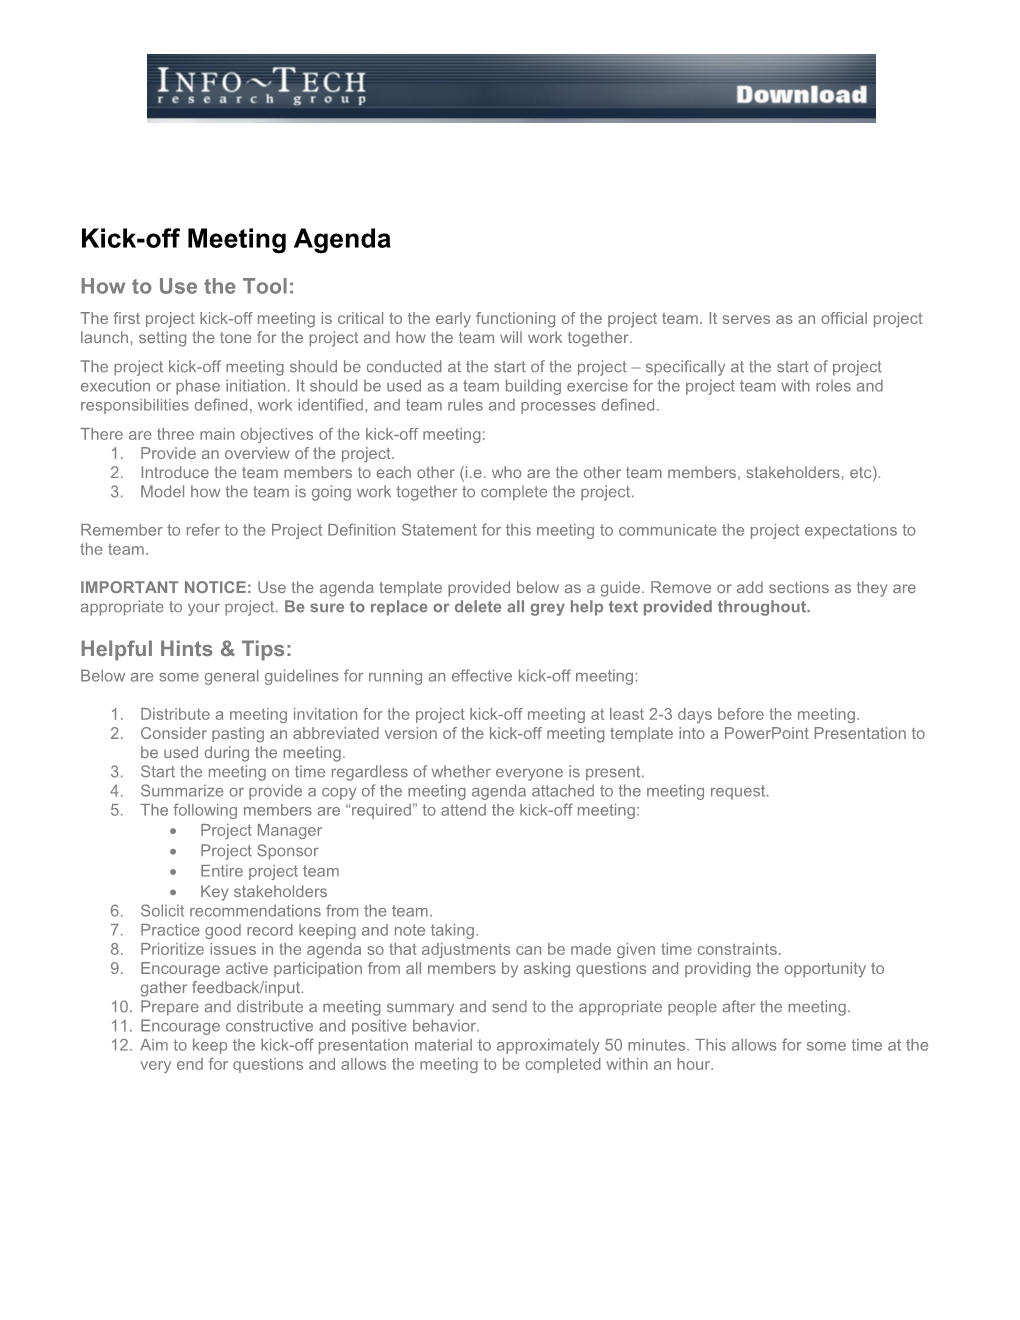 Project Kick-Off Meeting Agenda Template